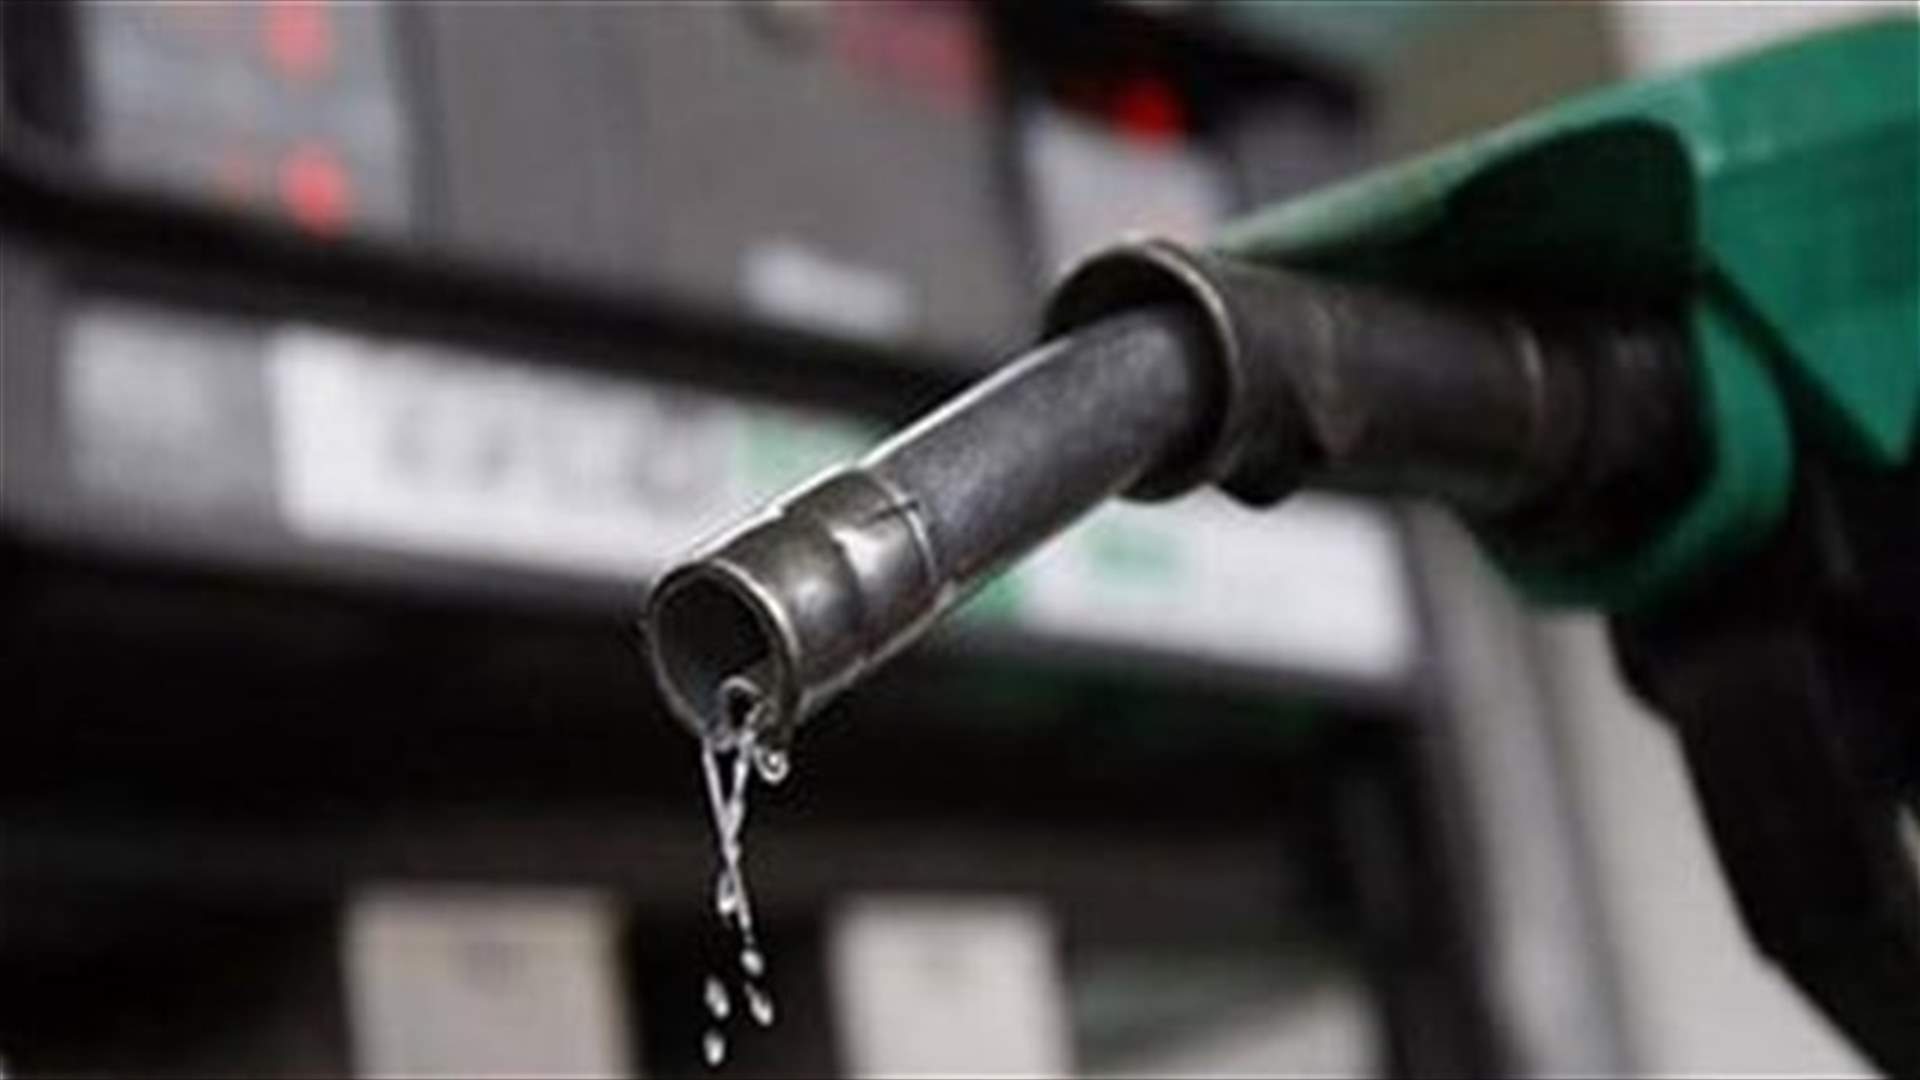 Lebanon fuel prices increase slightly